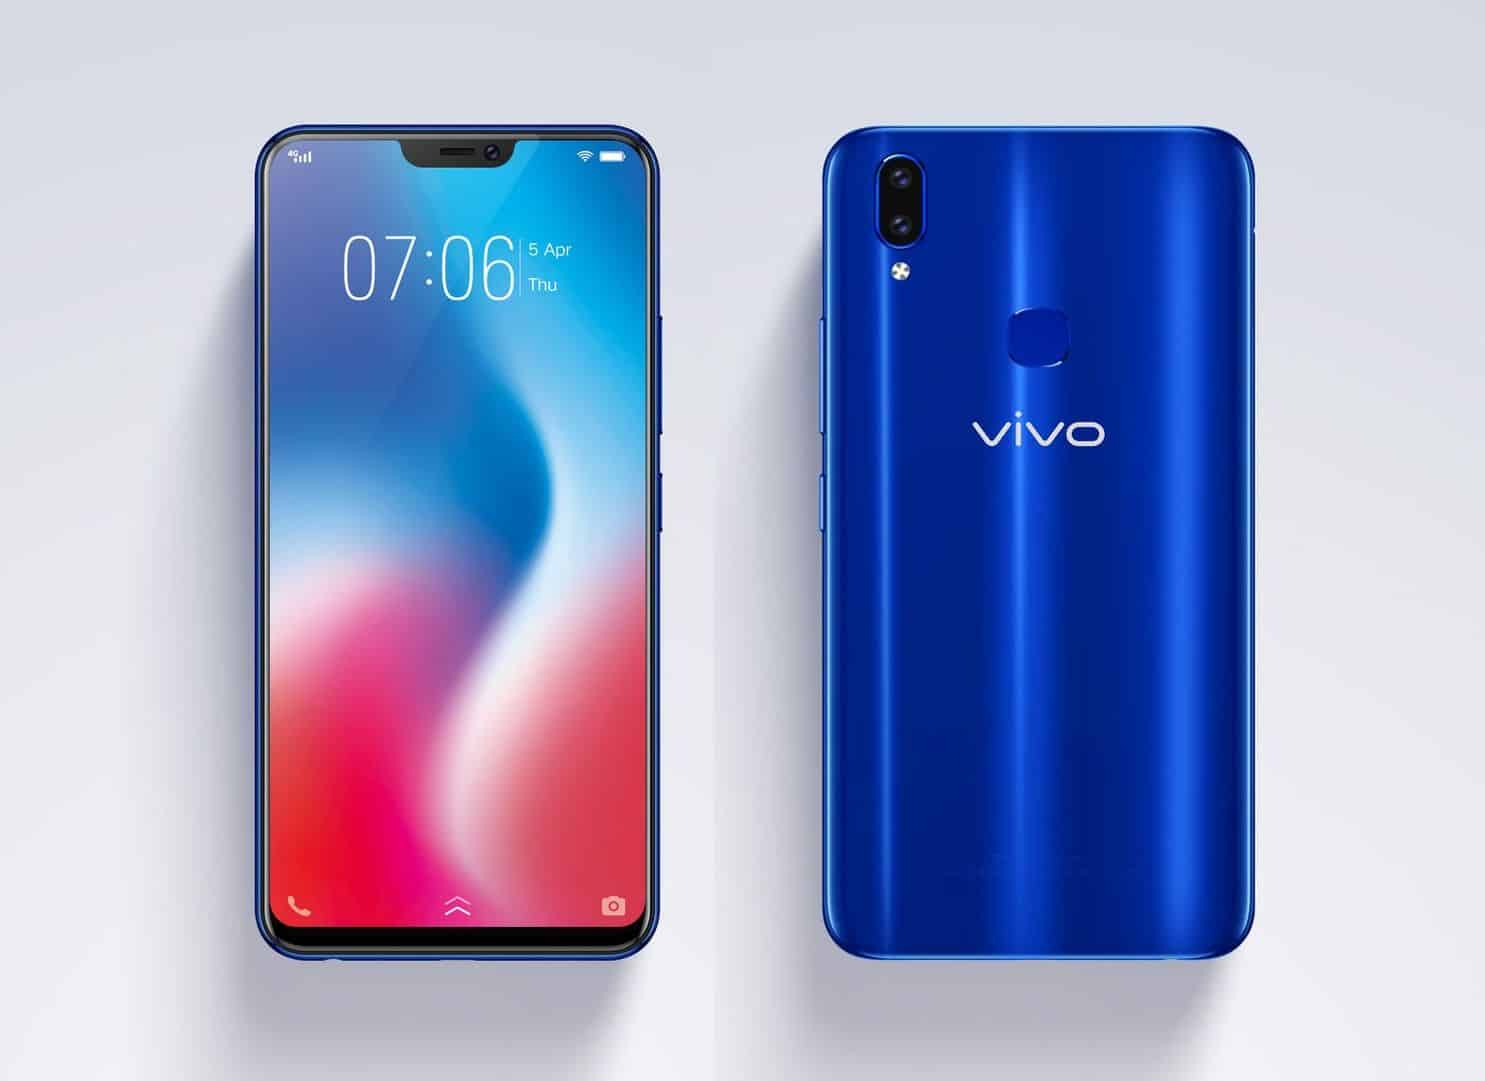 Vivo v9, vivo y83 and vivo x21 will become price cut in india ahead of vivo v11 pro release